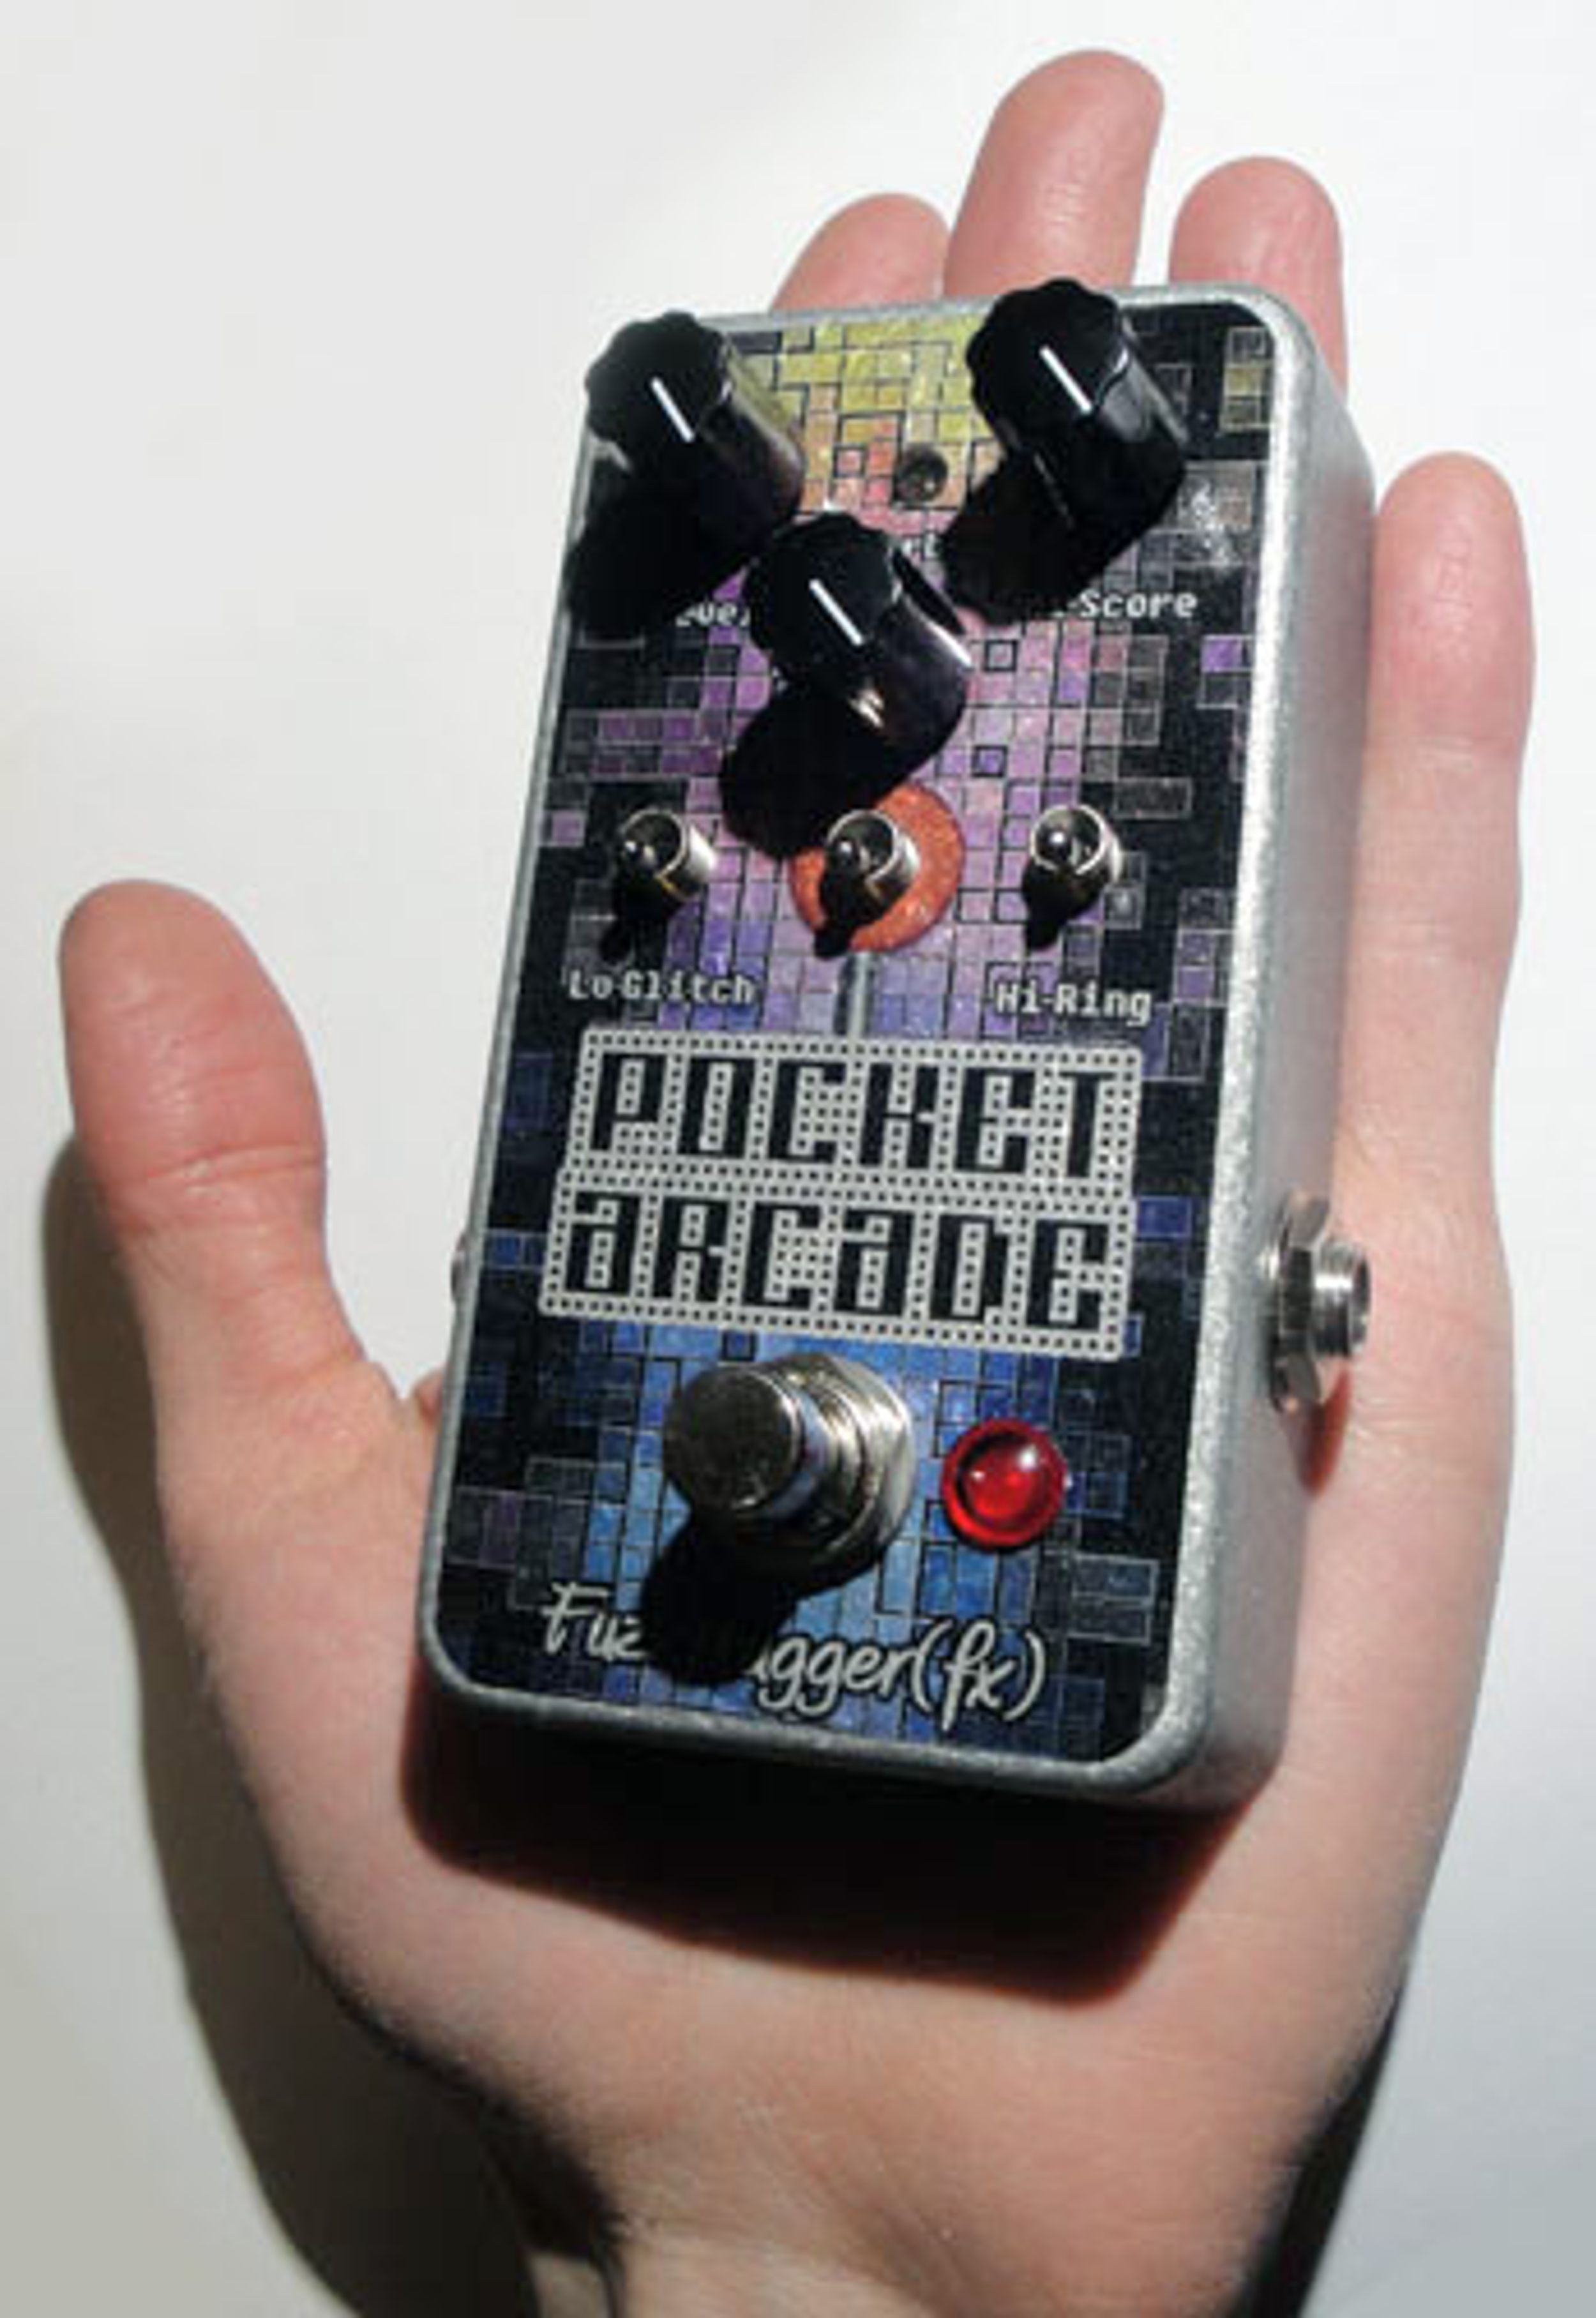 FuzzHugger Effects Announces the Pocket Arcade